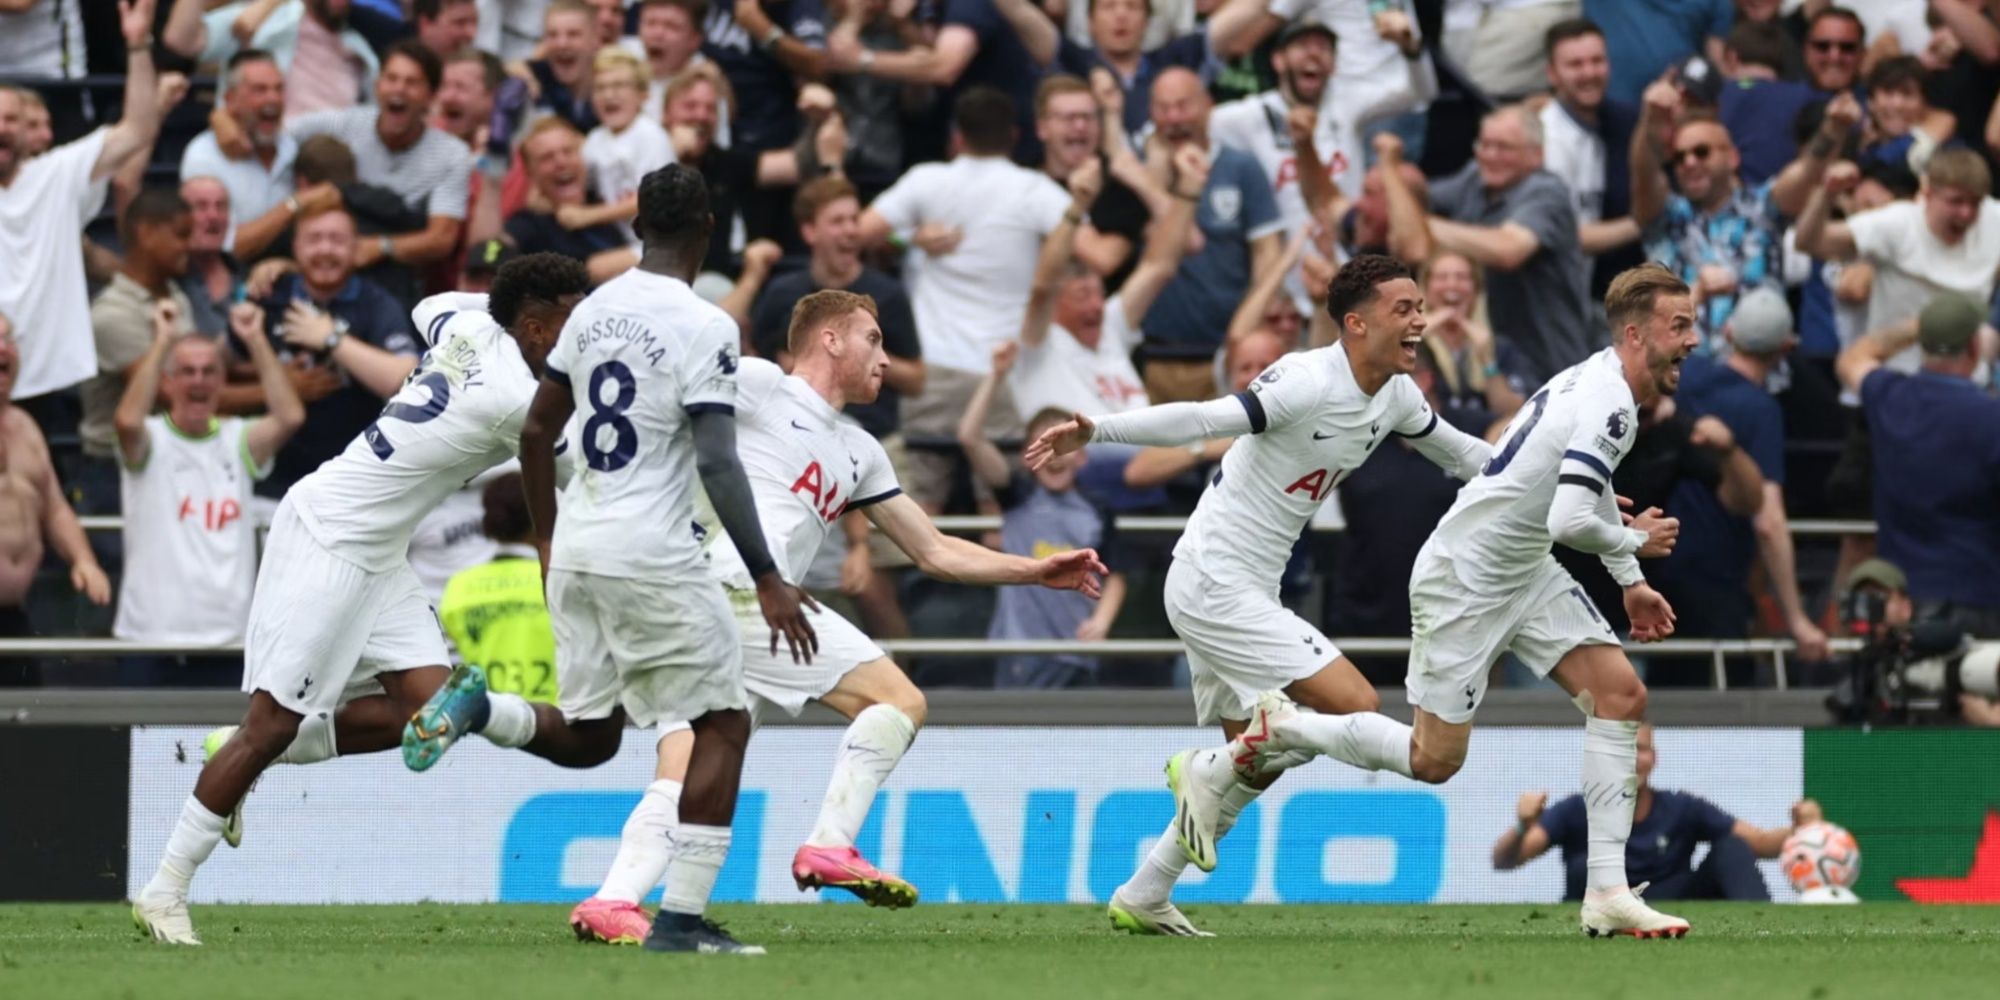 Tottenham's Dejan Kulusevski celebrates scoring their second goal against Sheffield United with teammates.